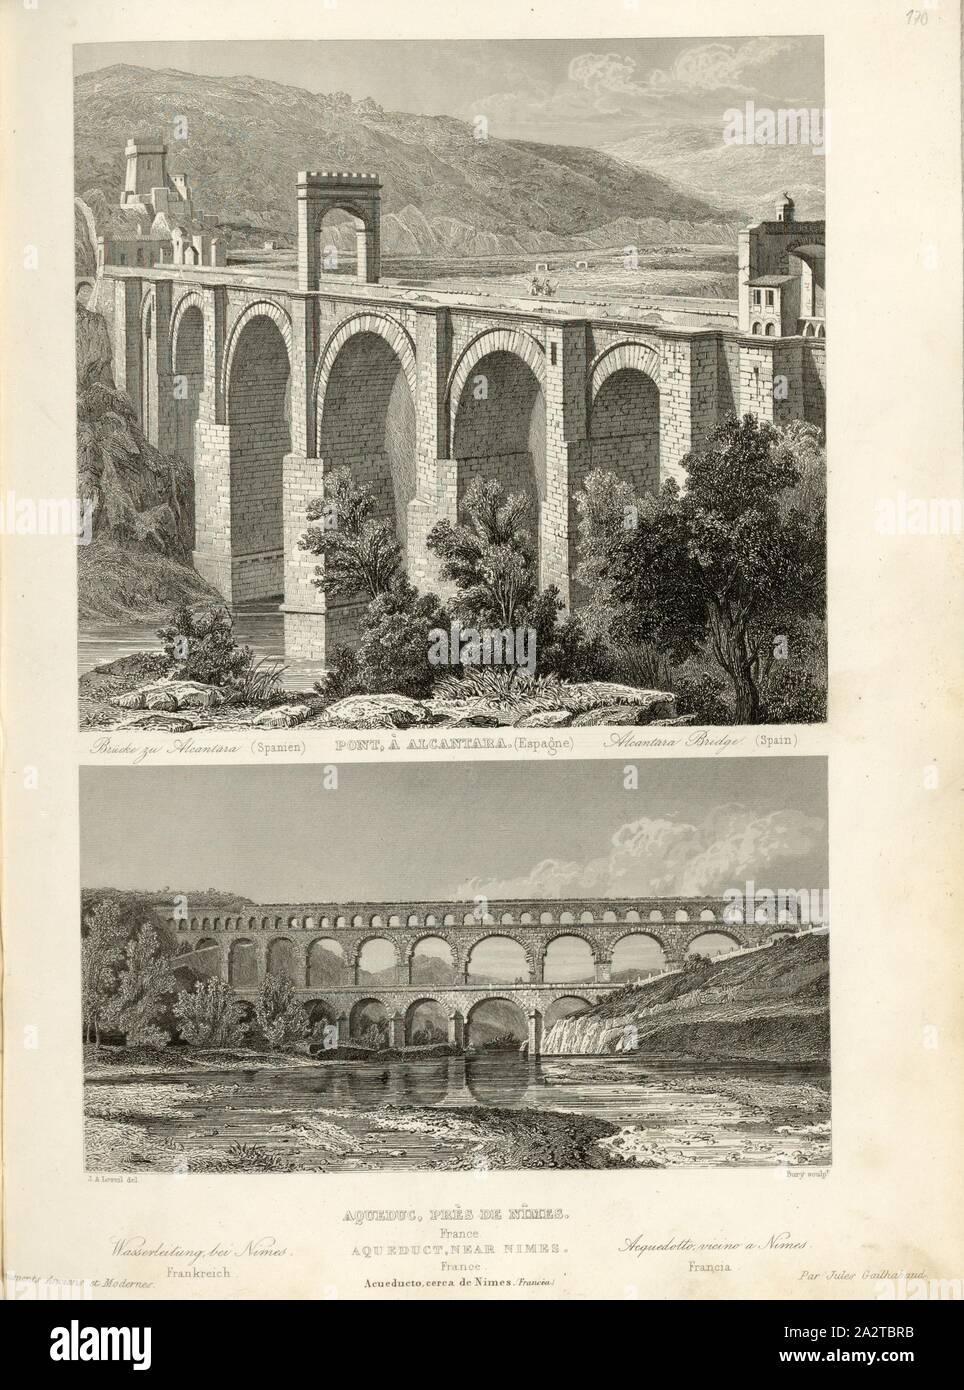 Aqueduct, near Nimes, Aqueduct near Nimes, signed: J. A. Leveil (del.); Bury (sc.), Fig. 101, p. 411, Leveil, J. A. (del.); Bury (sculp.), 1853, Jules Gailhabaud: Monuments anciens et modernes. Bd. 1. Paris: Librairie de Firmin Didot frères, 1853 Stock Photo